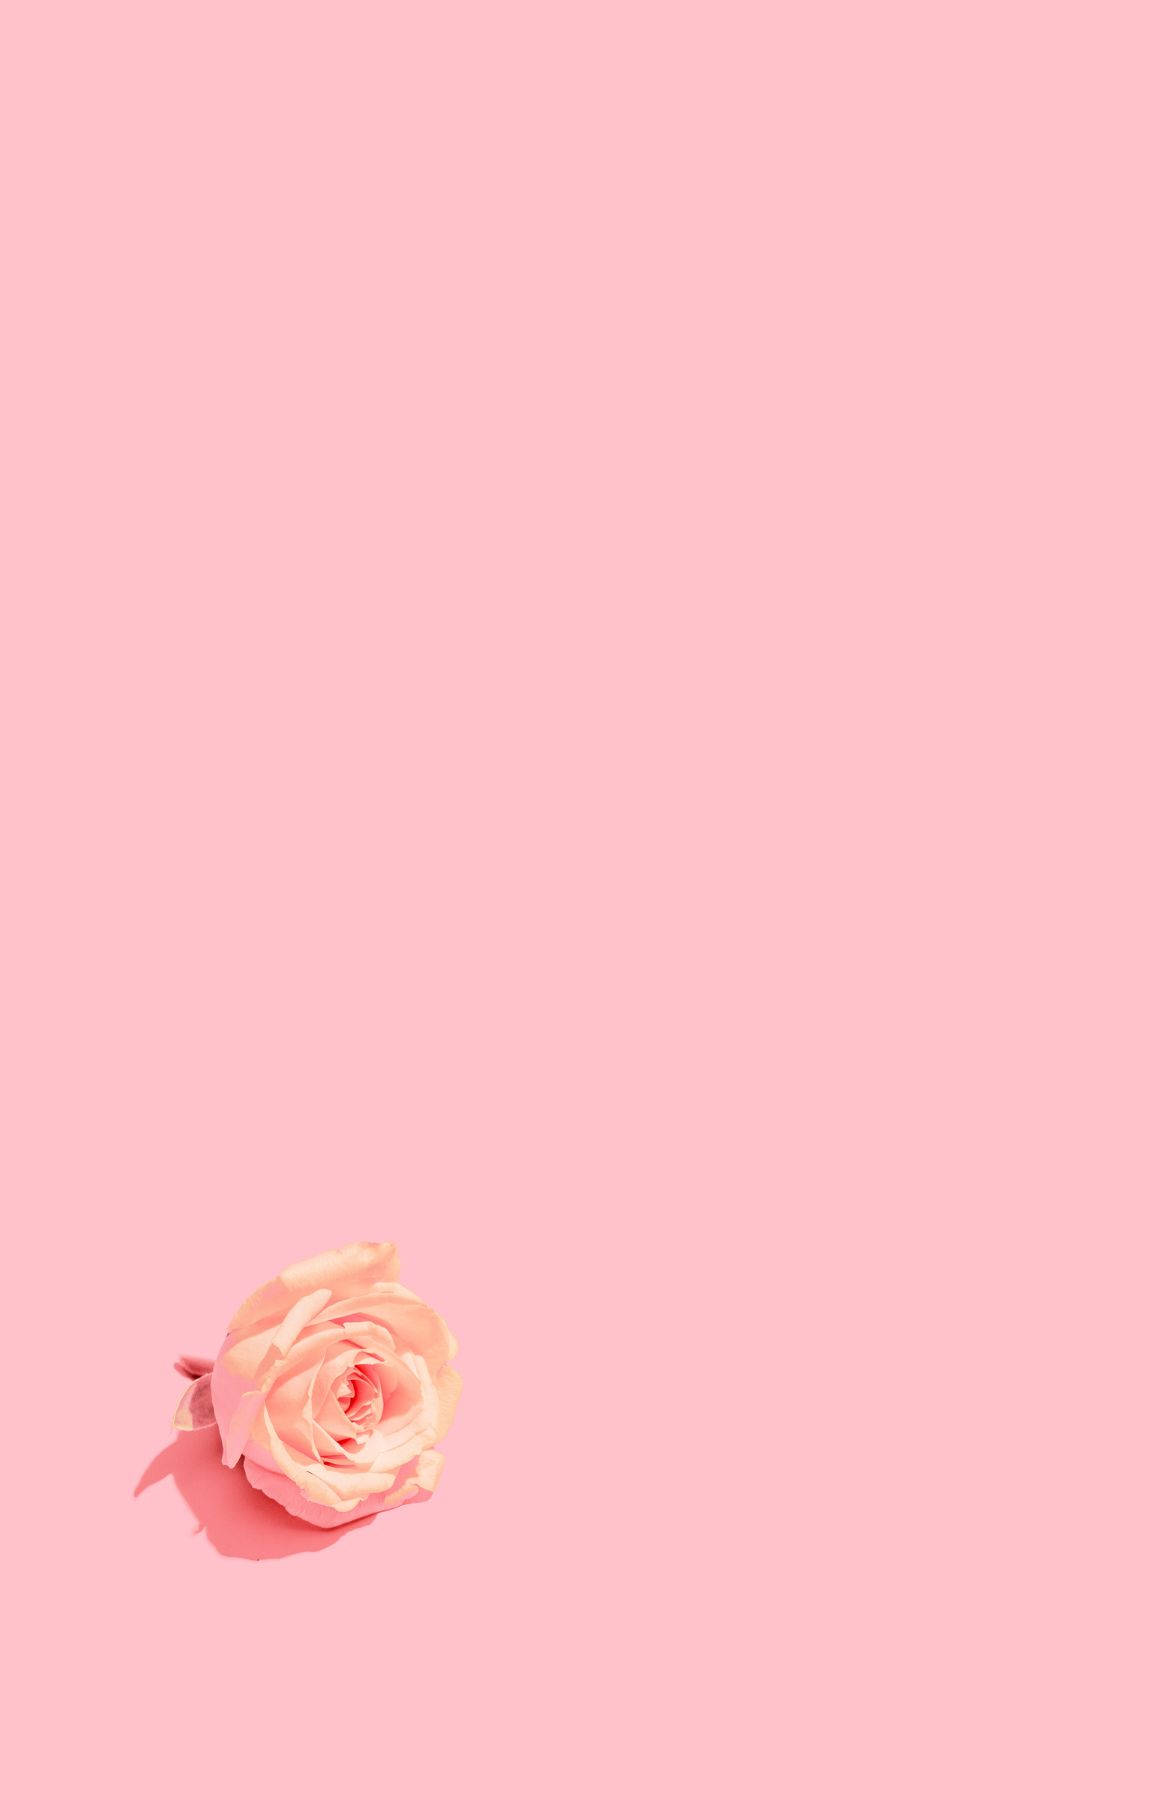 Download Minimalist Baby Pink Rose Flower Wallpaper 